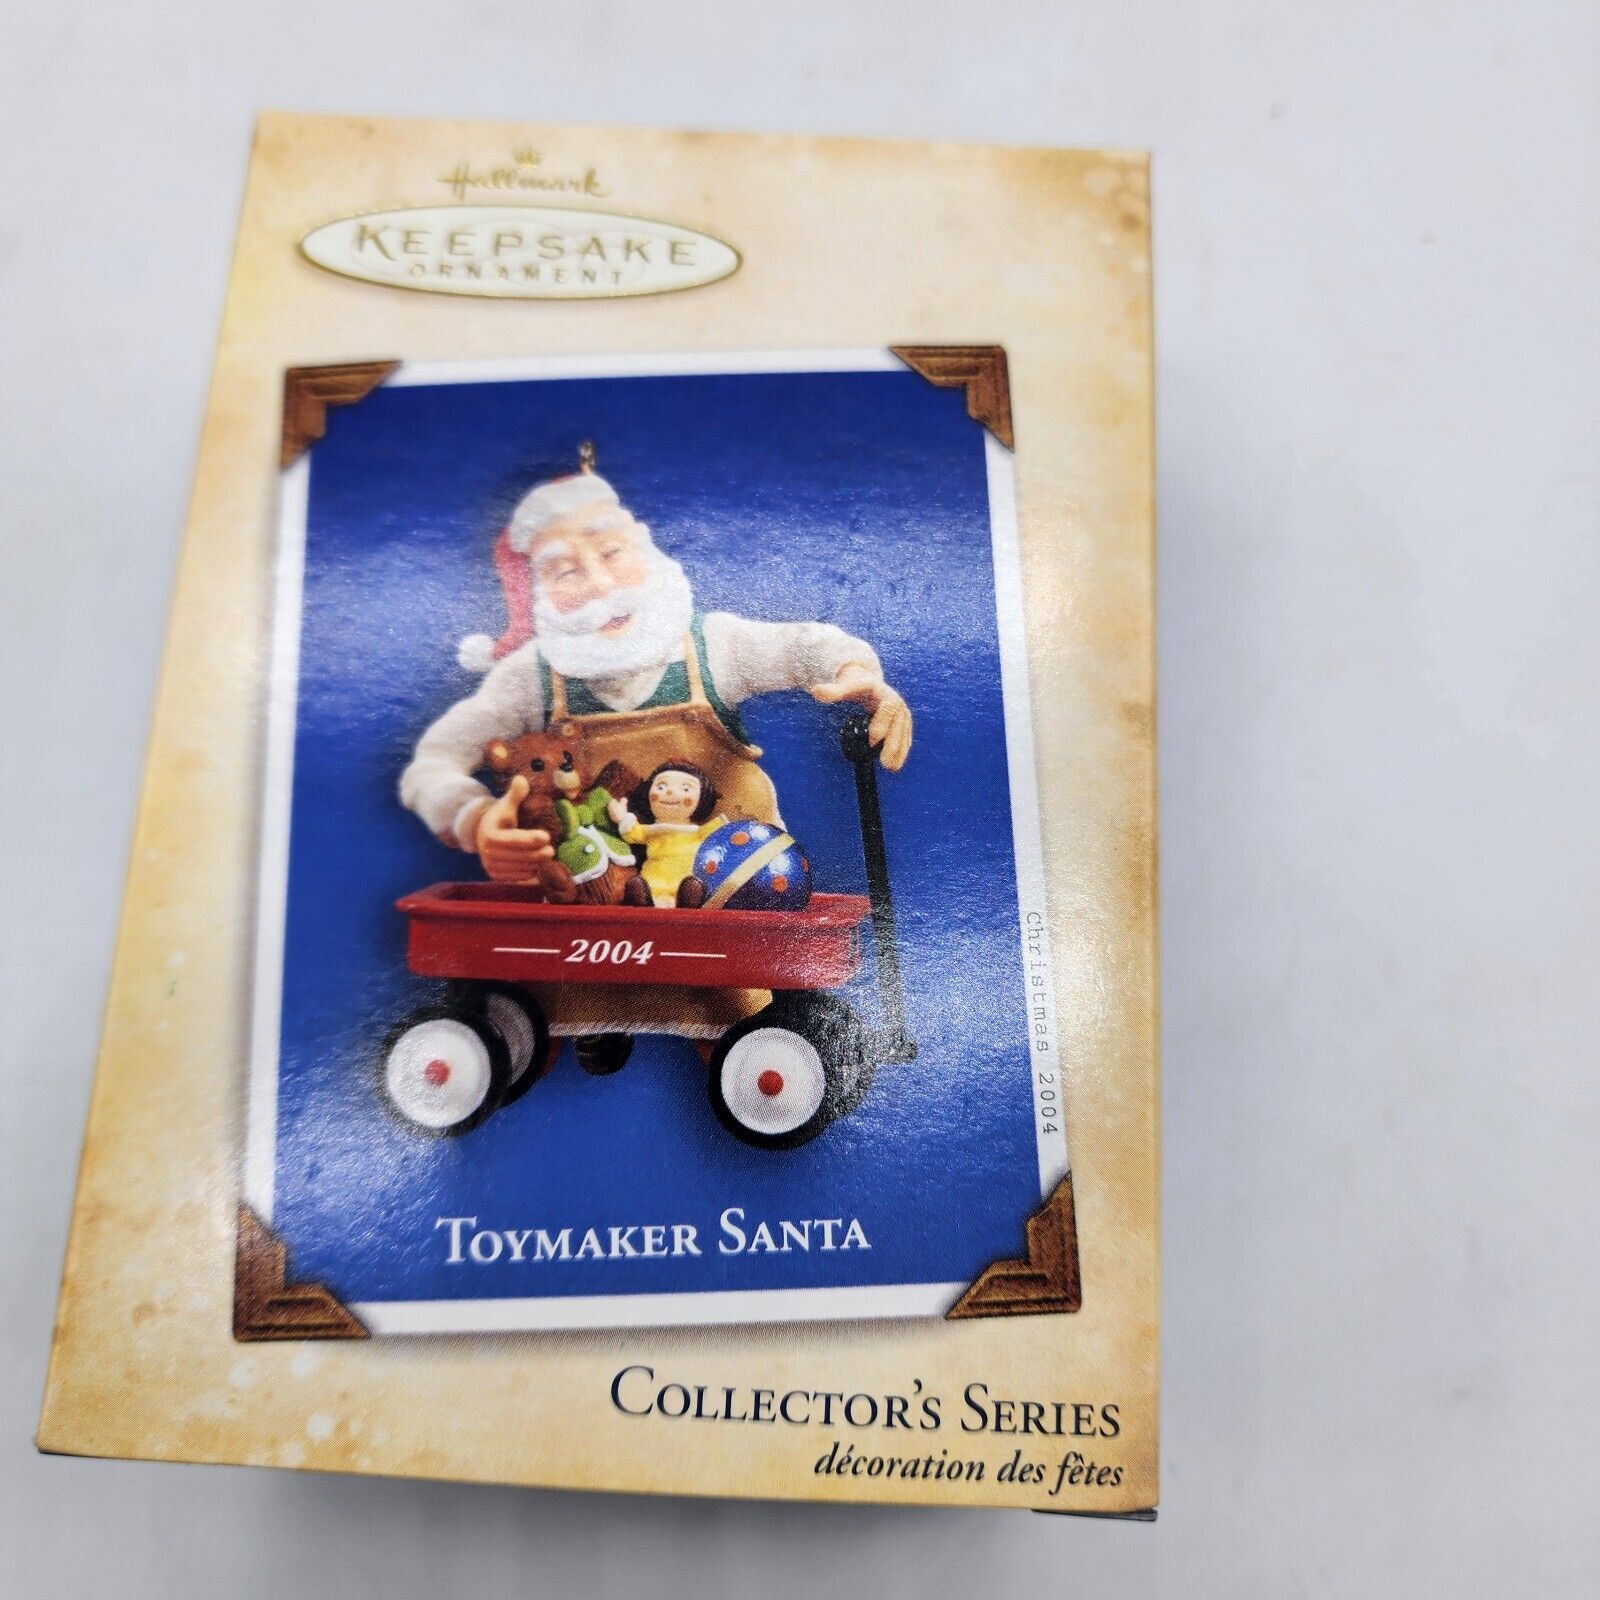 Hallmark Keepsake 2004 Toymaker Santa Ornament Collector Series In Original Box